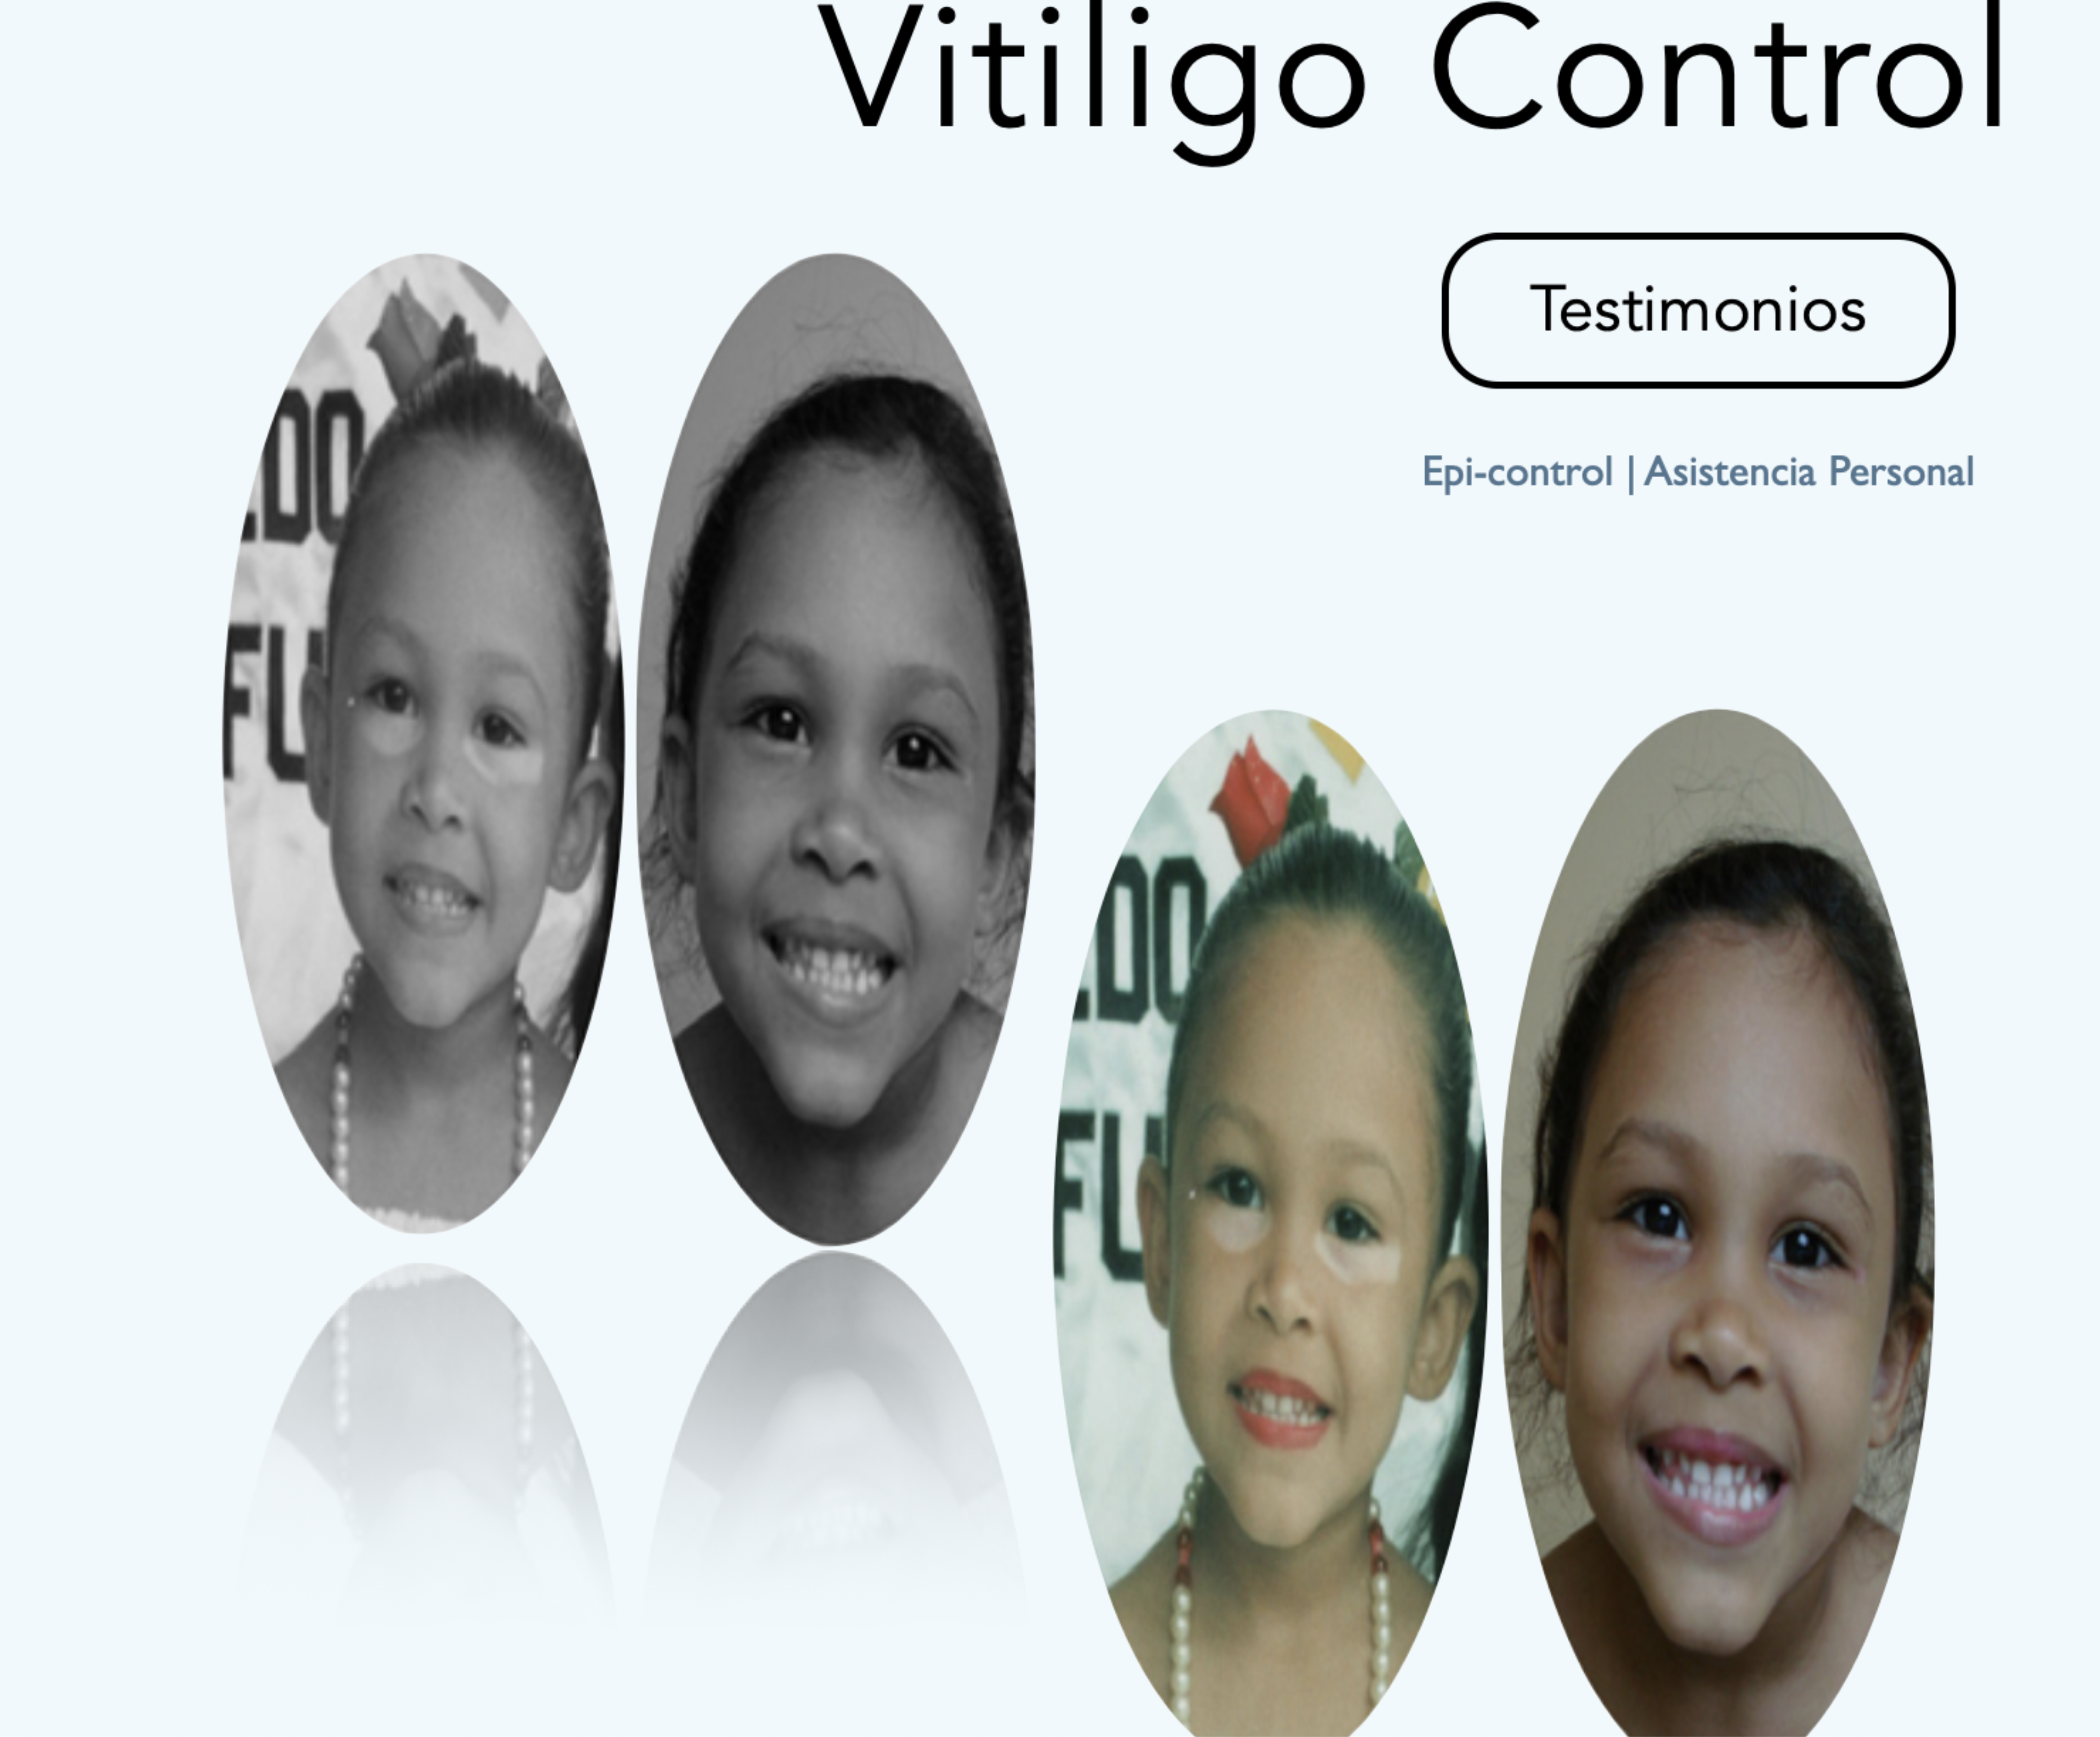 testimonios_libro_evitando_y_controlando_vitiligo_10.png